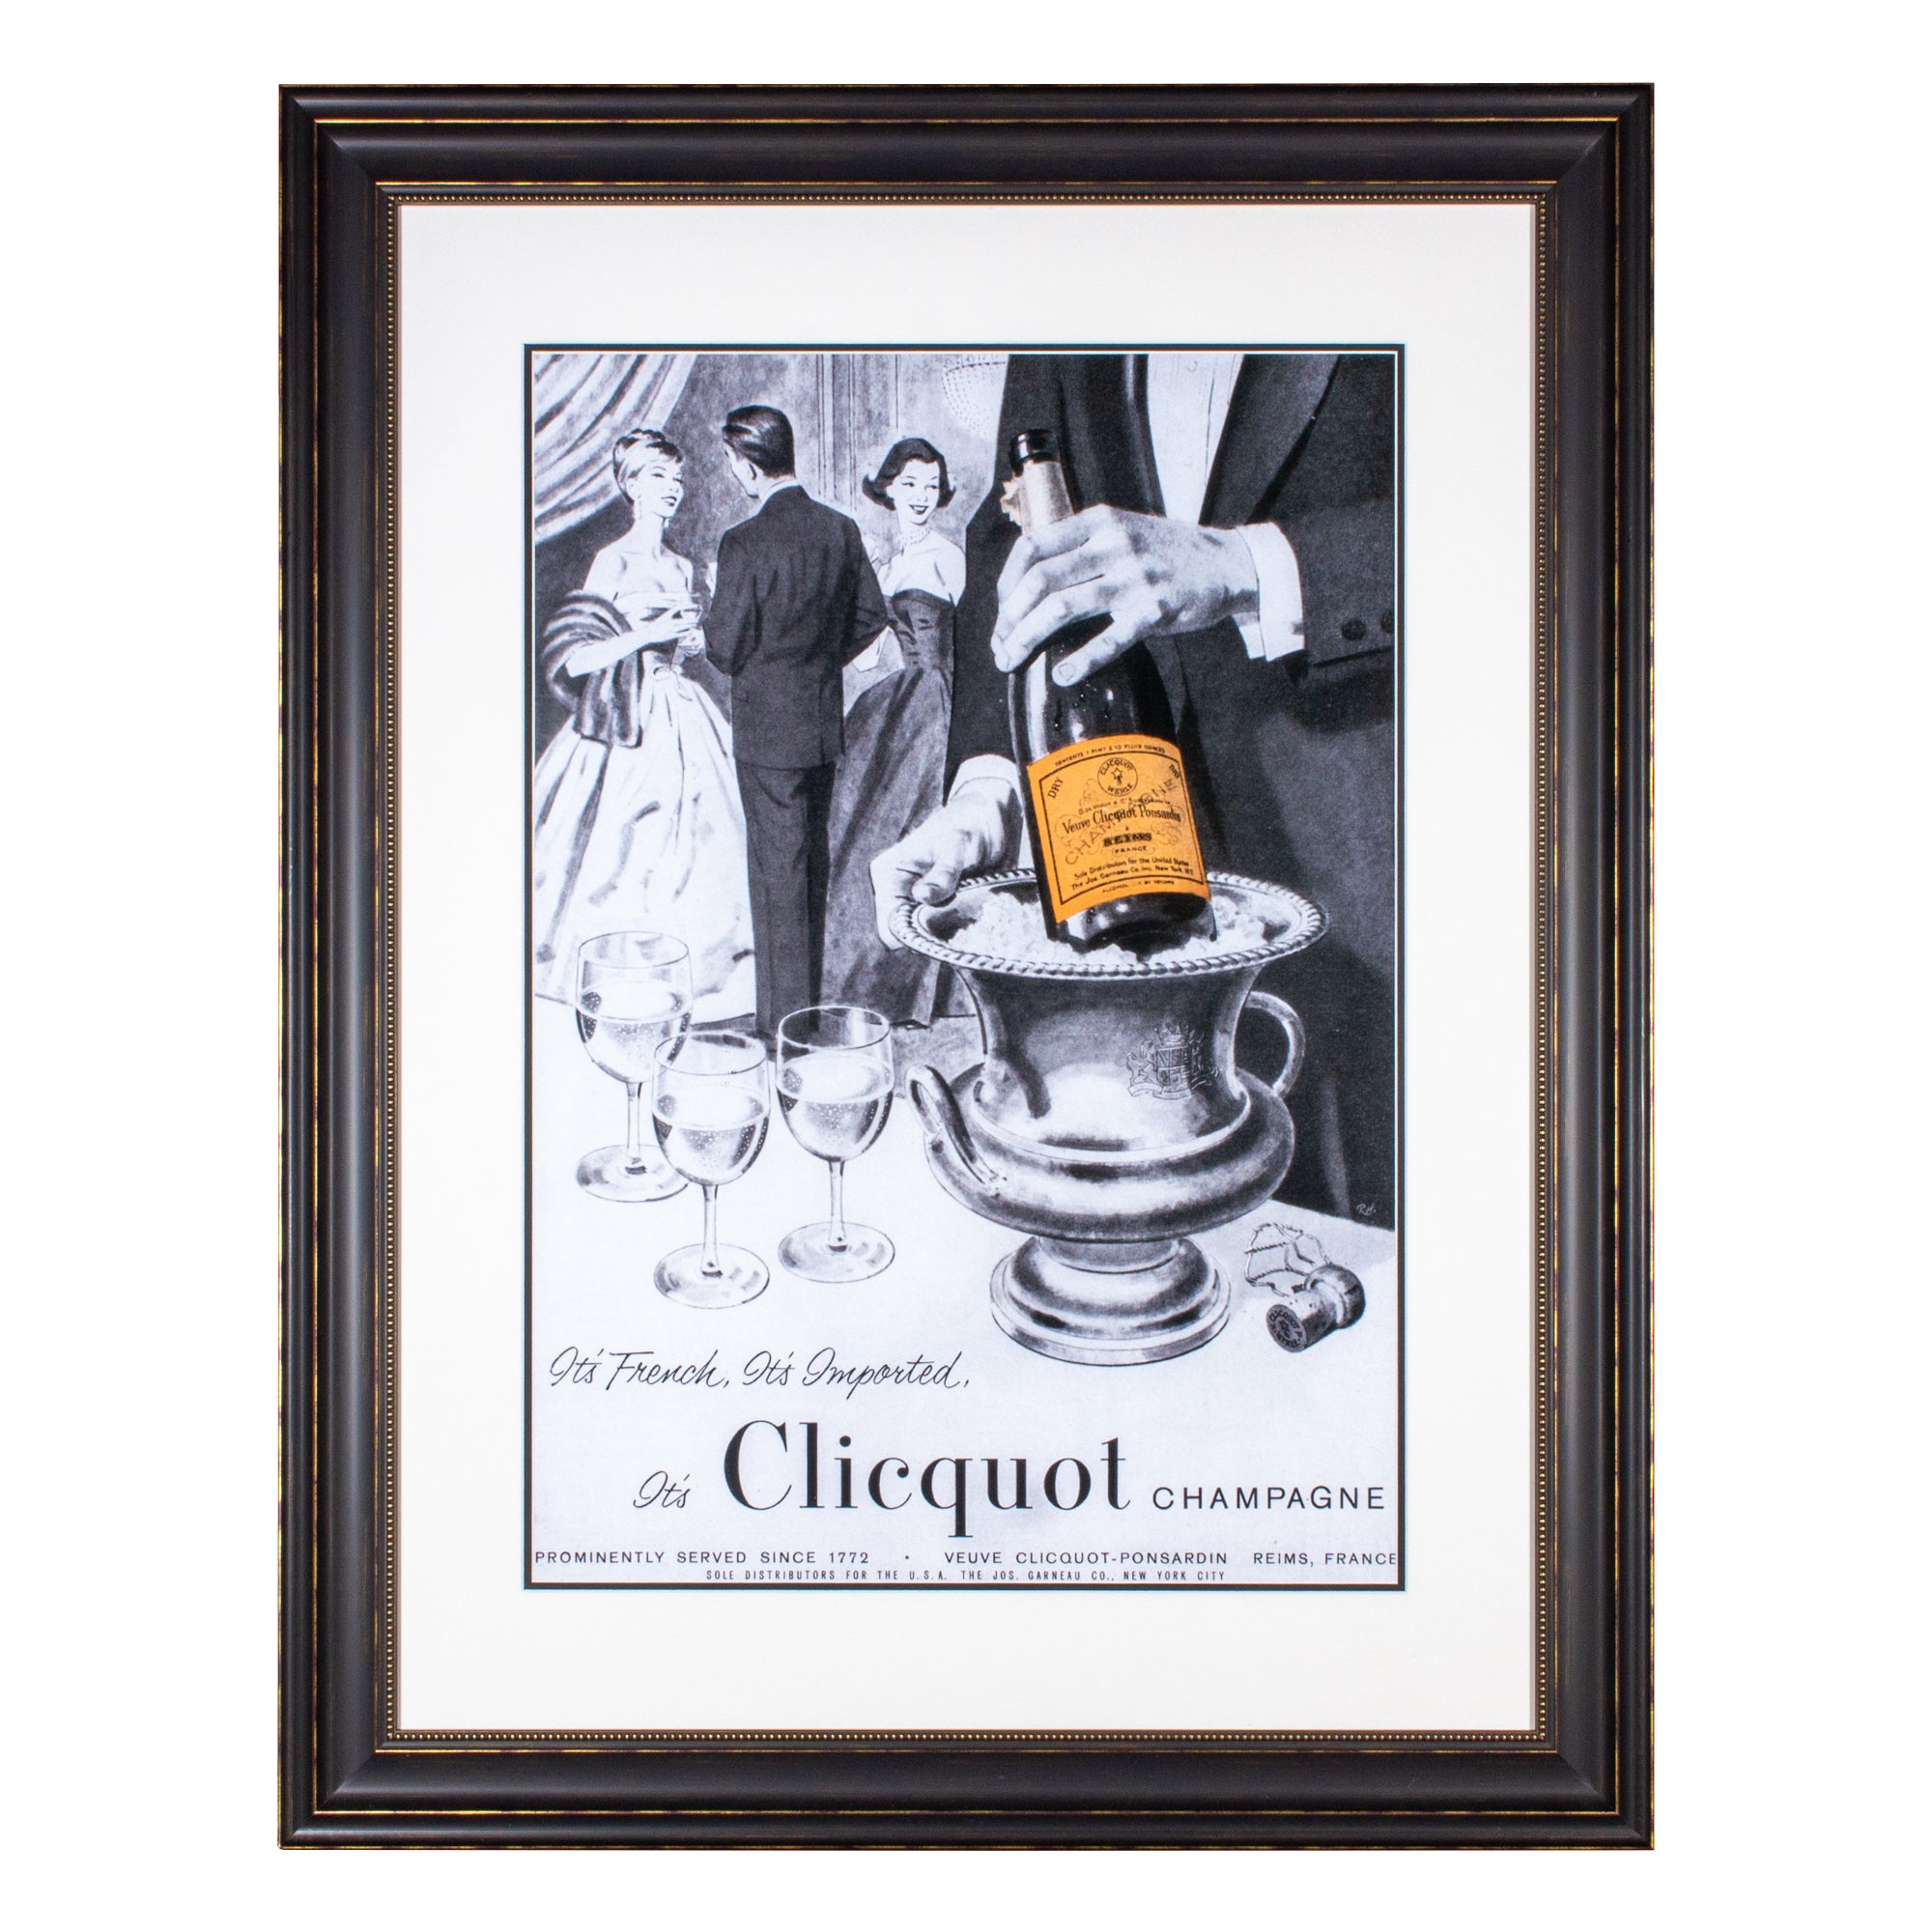 Veuve Clicquot Champagne Vintage 1940's Press Advertisement for Veuve  Clicquot Champagne. 'Its French, Its Imported' showing